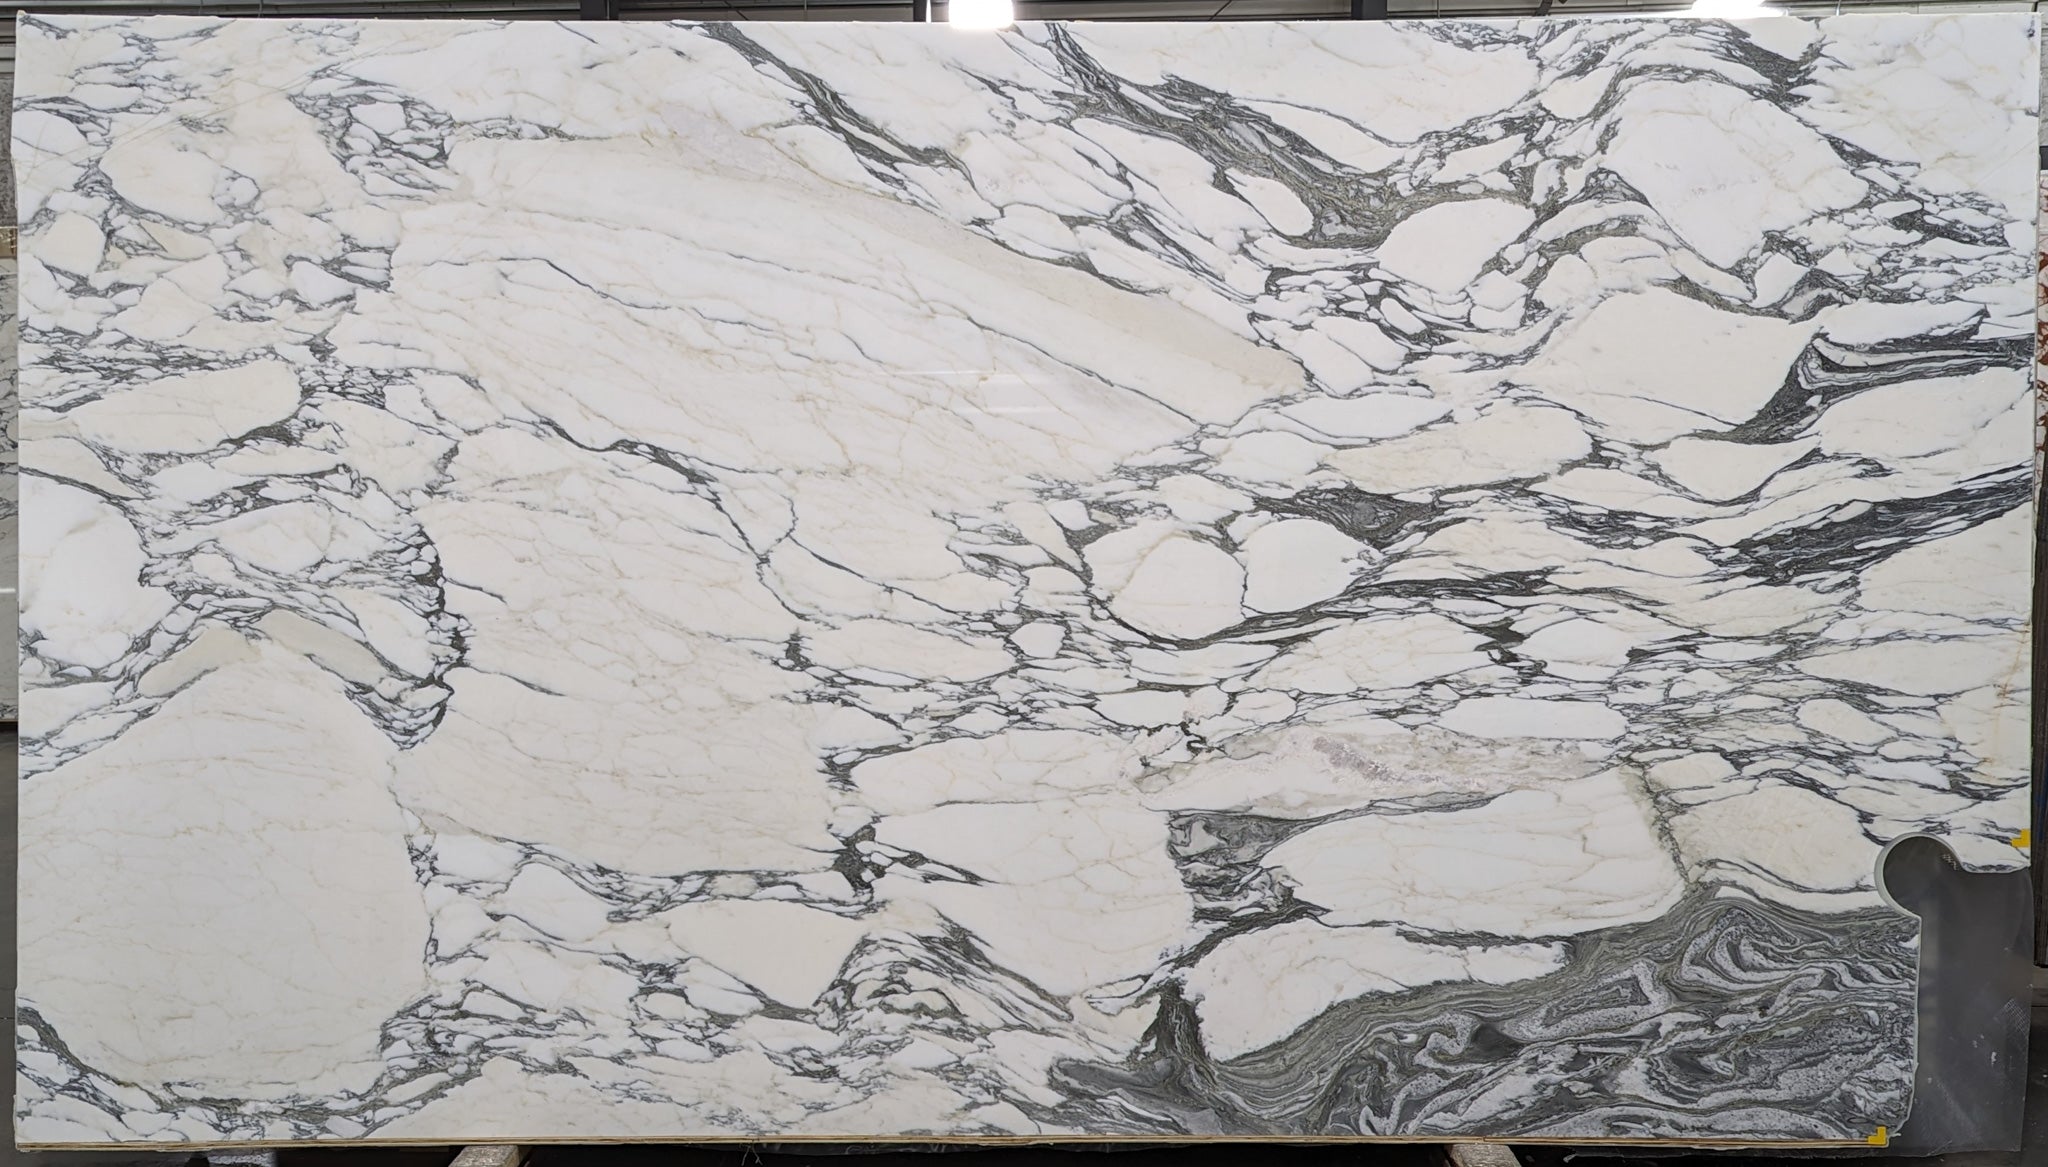  Arabescato Corchia A1 Select Marble Slab 3/4 - 878#51 -  52x130 